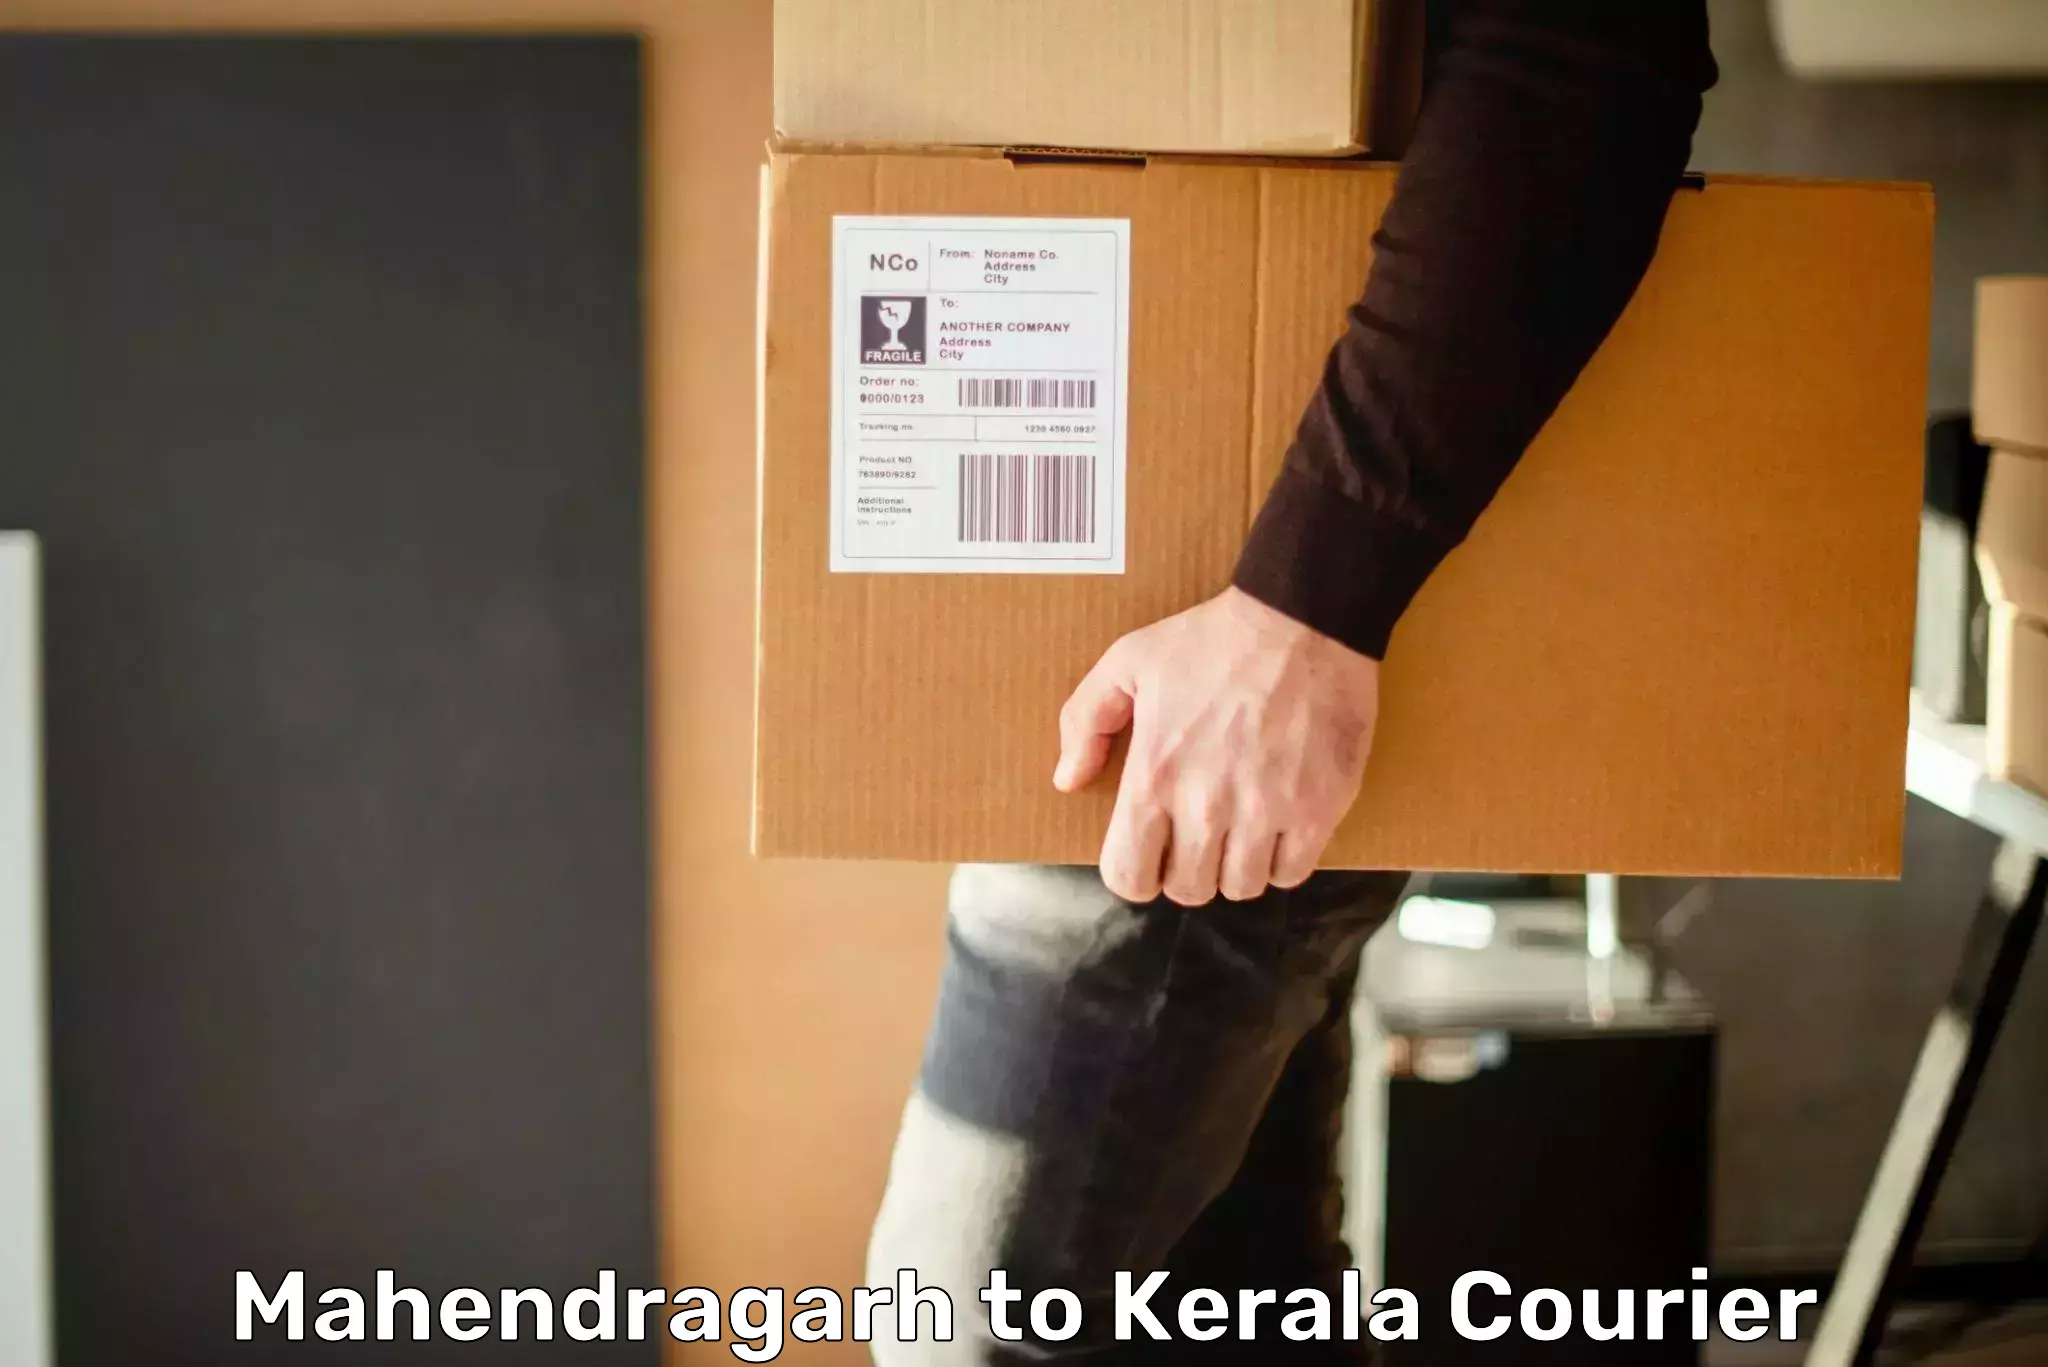 Enhanced tracking features Mahendragarh to Kerala